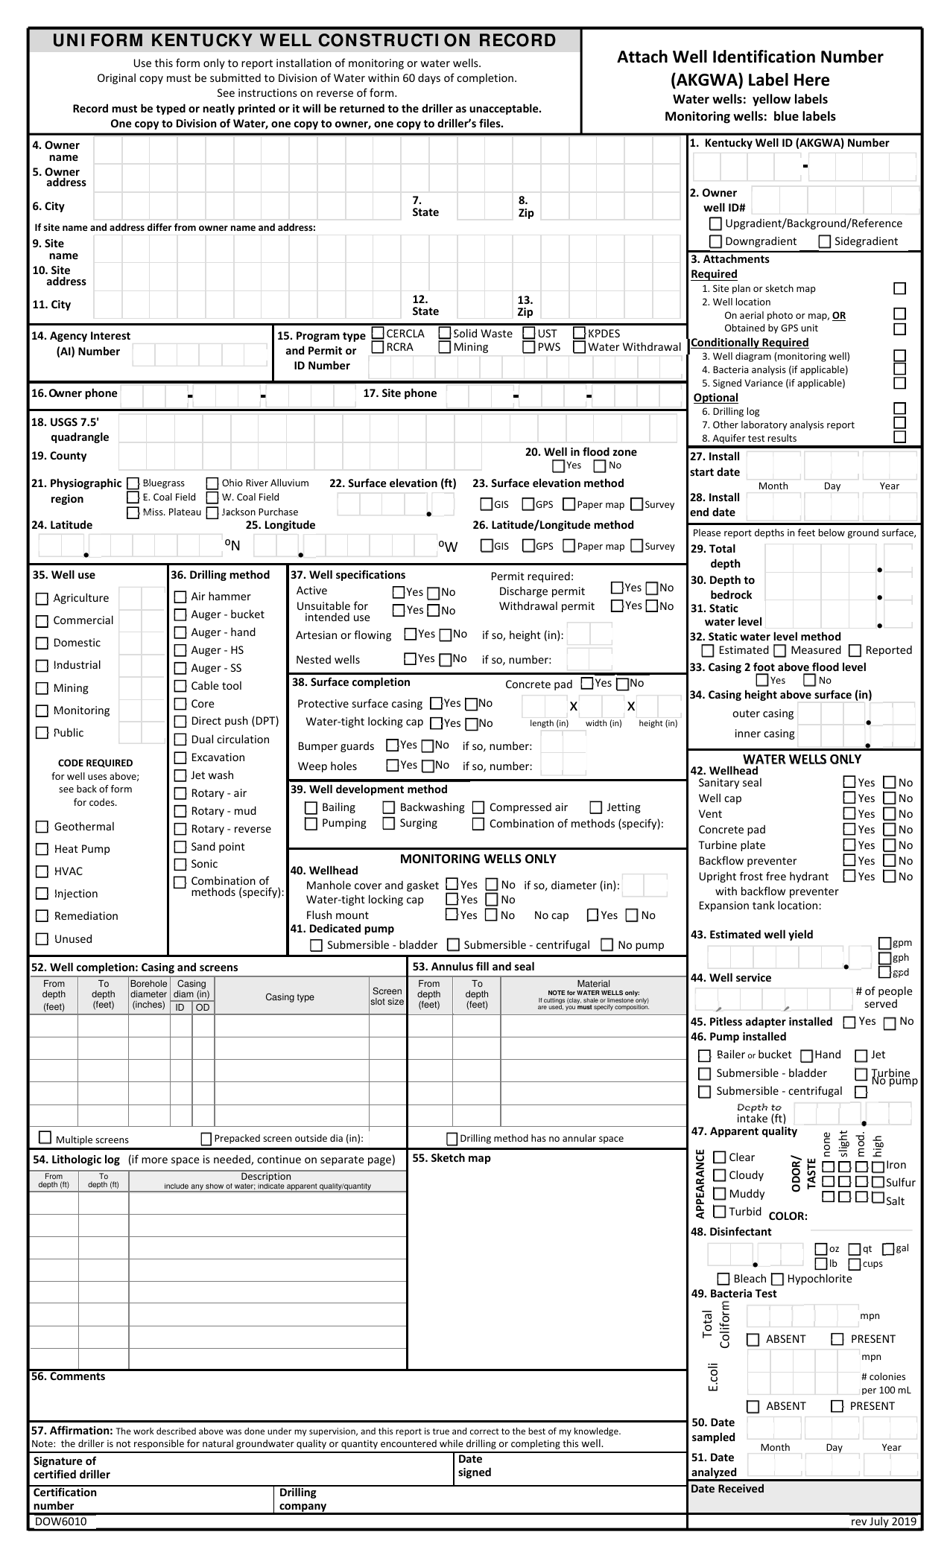 Form DOW6010 Uniform Kentucky Well Construction Record - Kentucky, Page 1